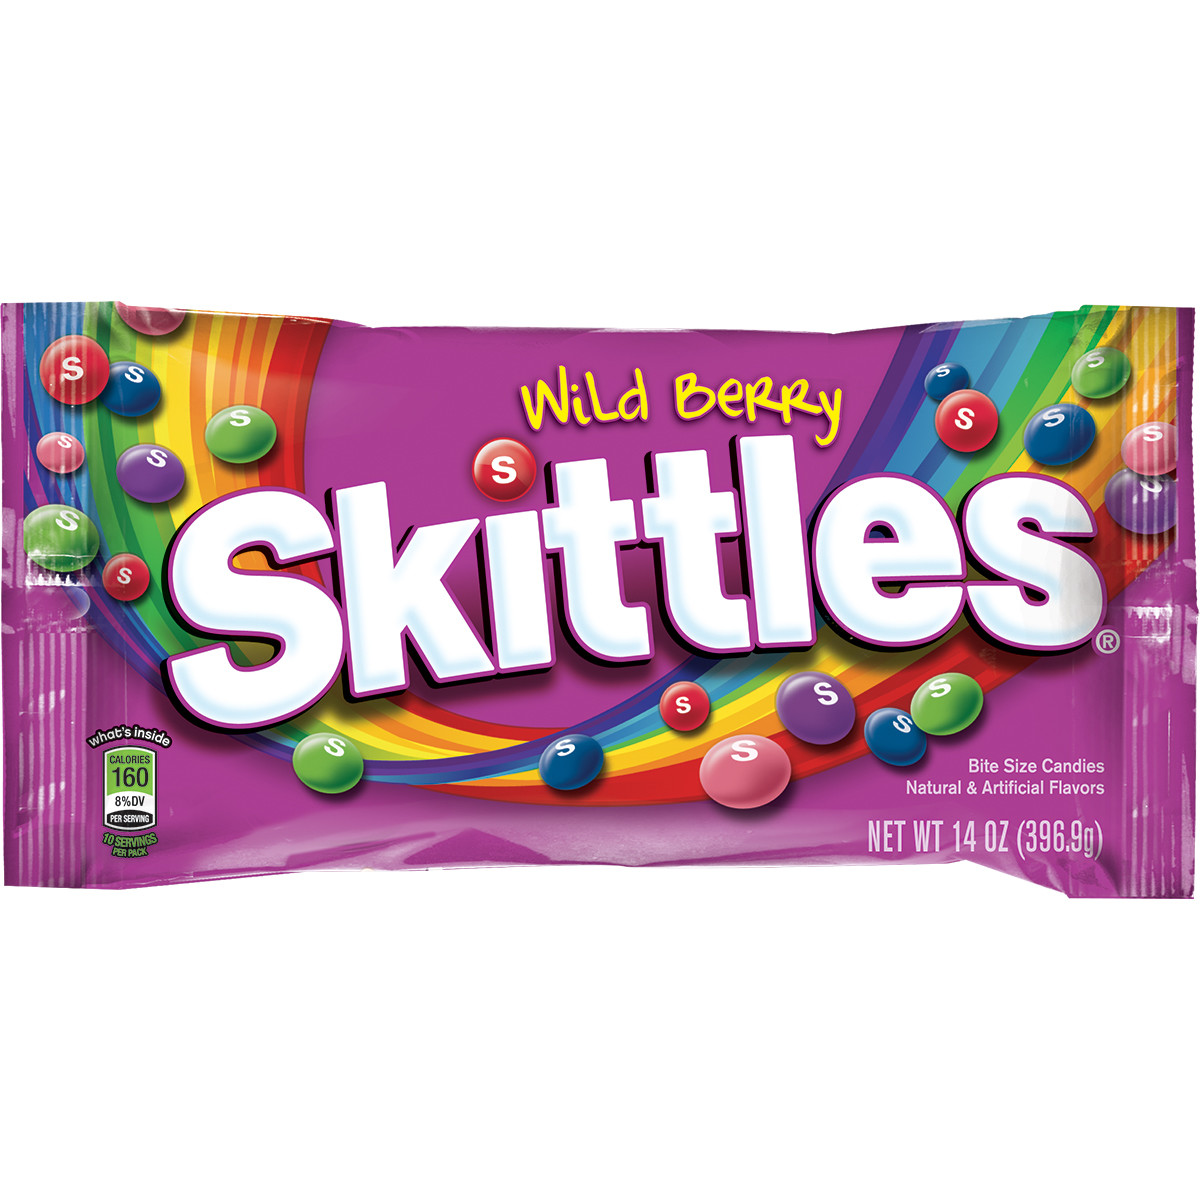 Skittles Wild Berry 2.17oz (6